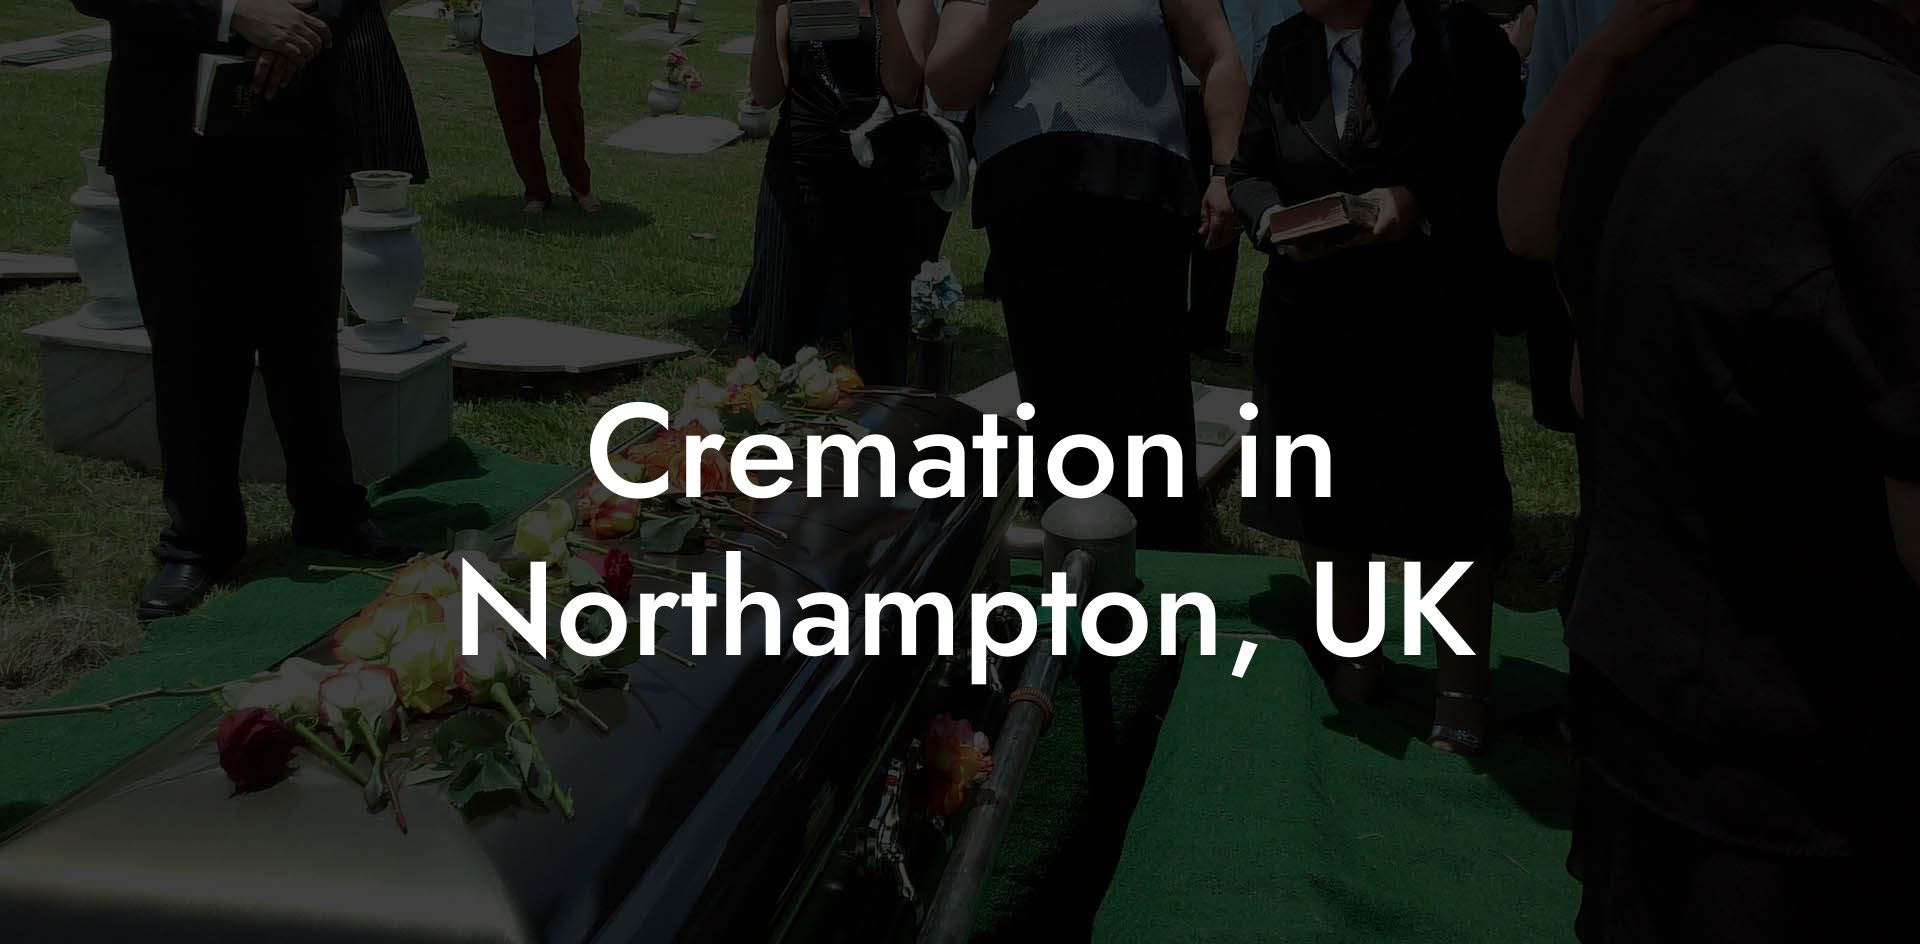 Cremation in Northampton, UK